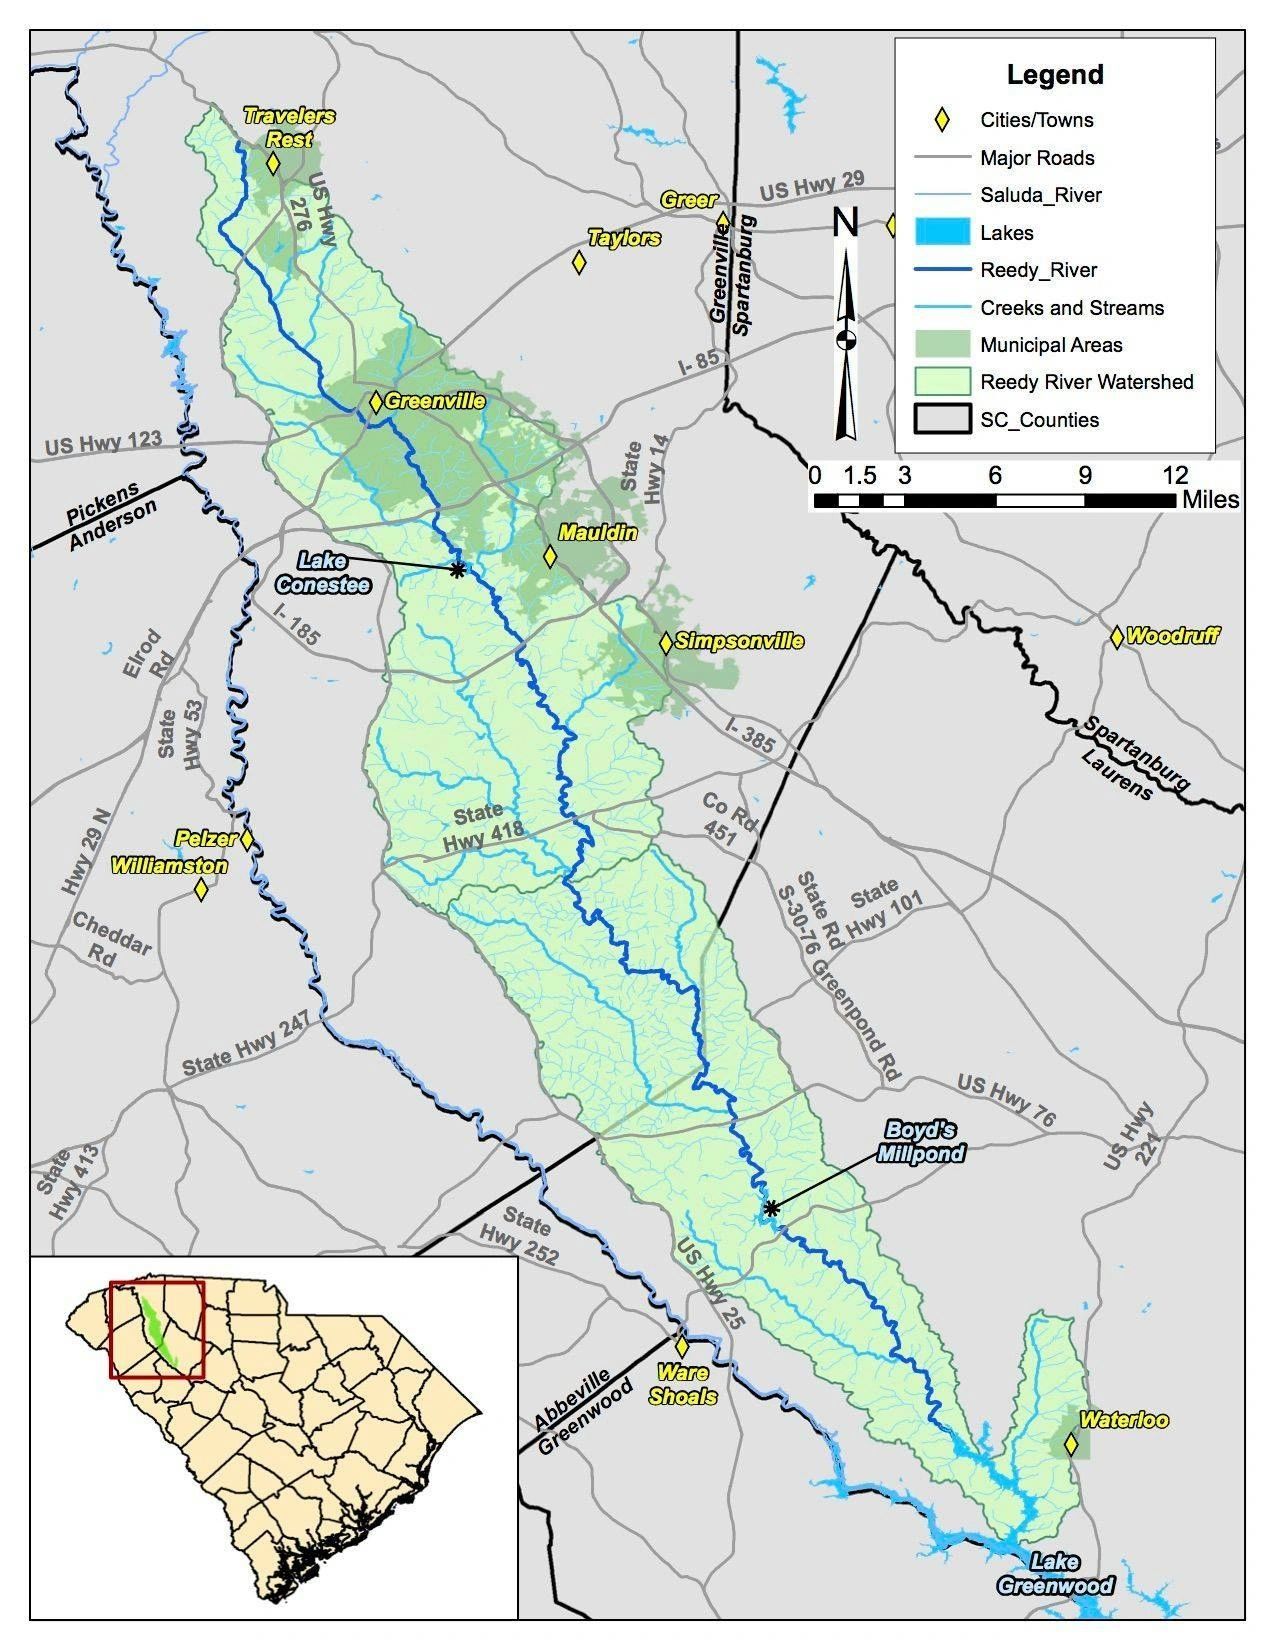 Reedy River Watershed